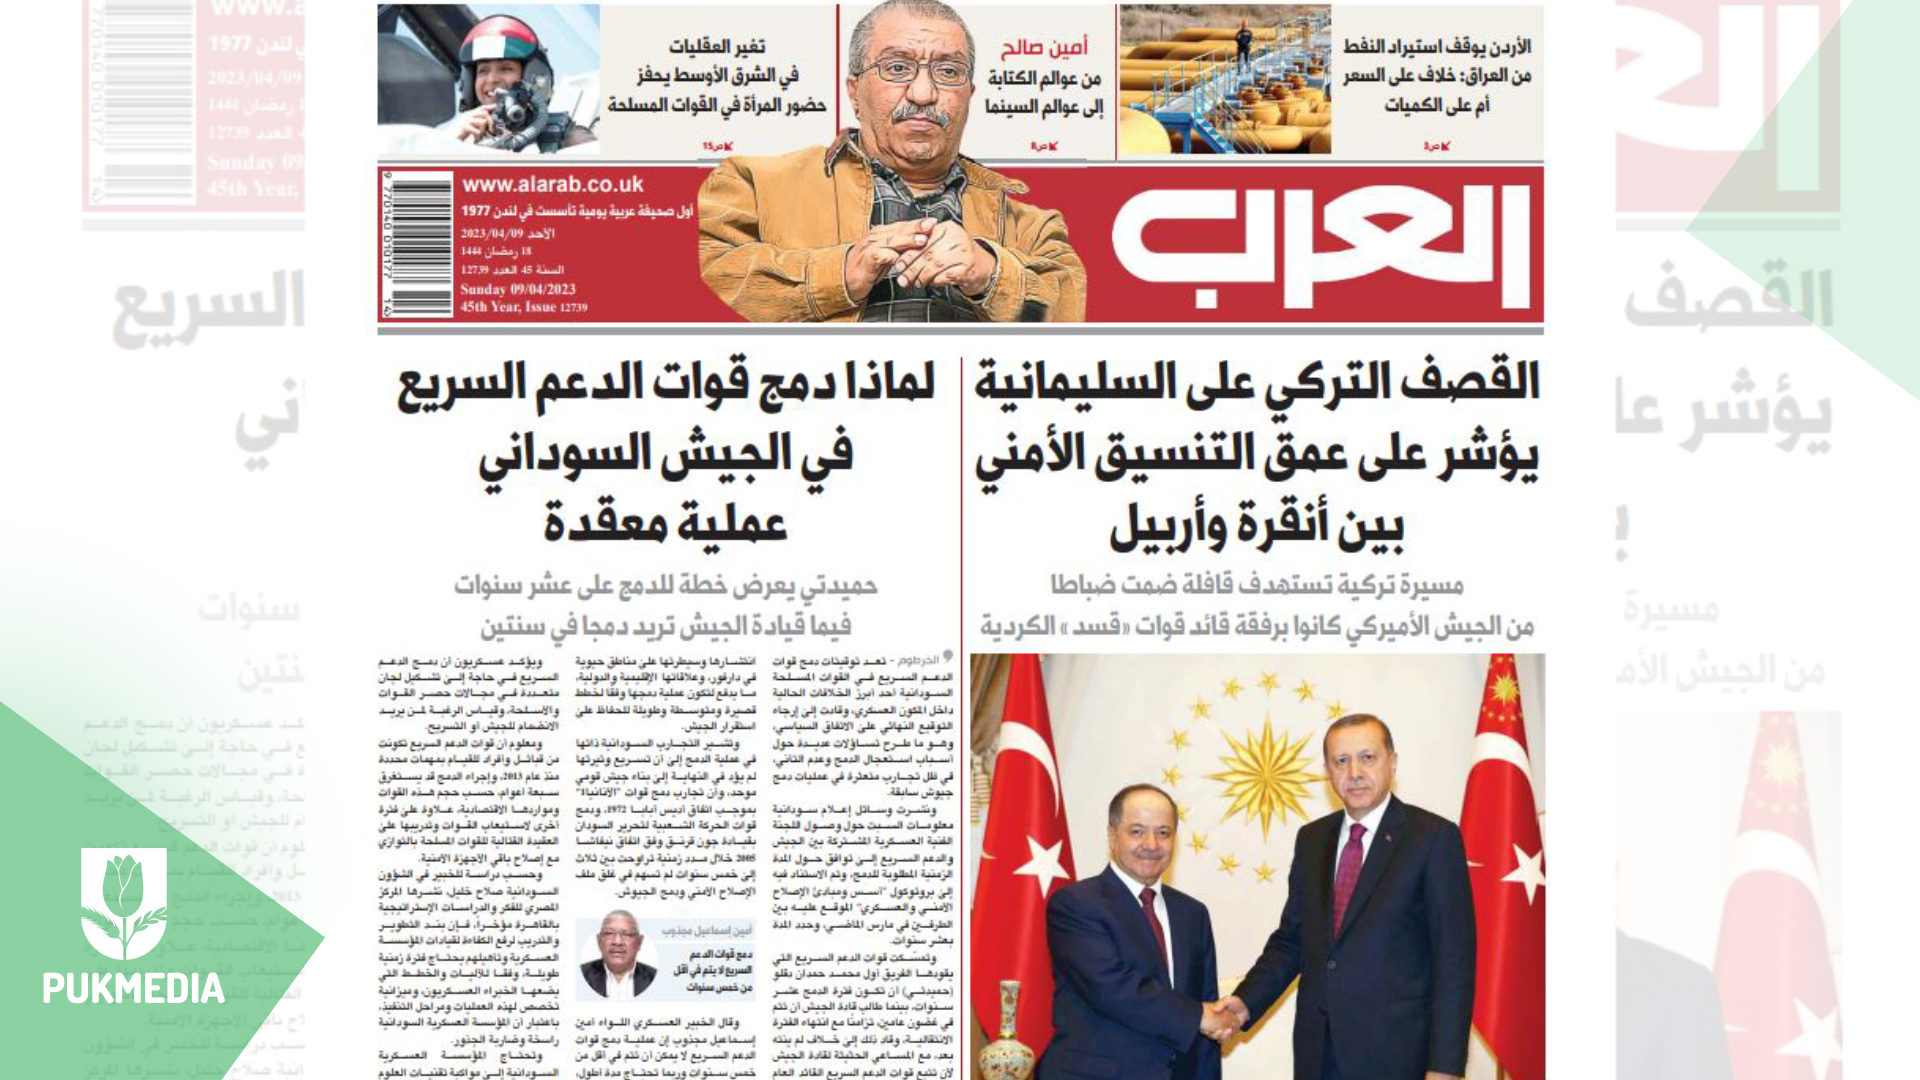  Al-Arab newspaper.